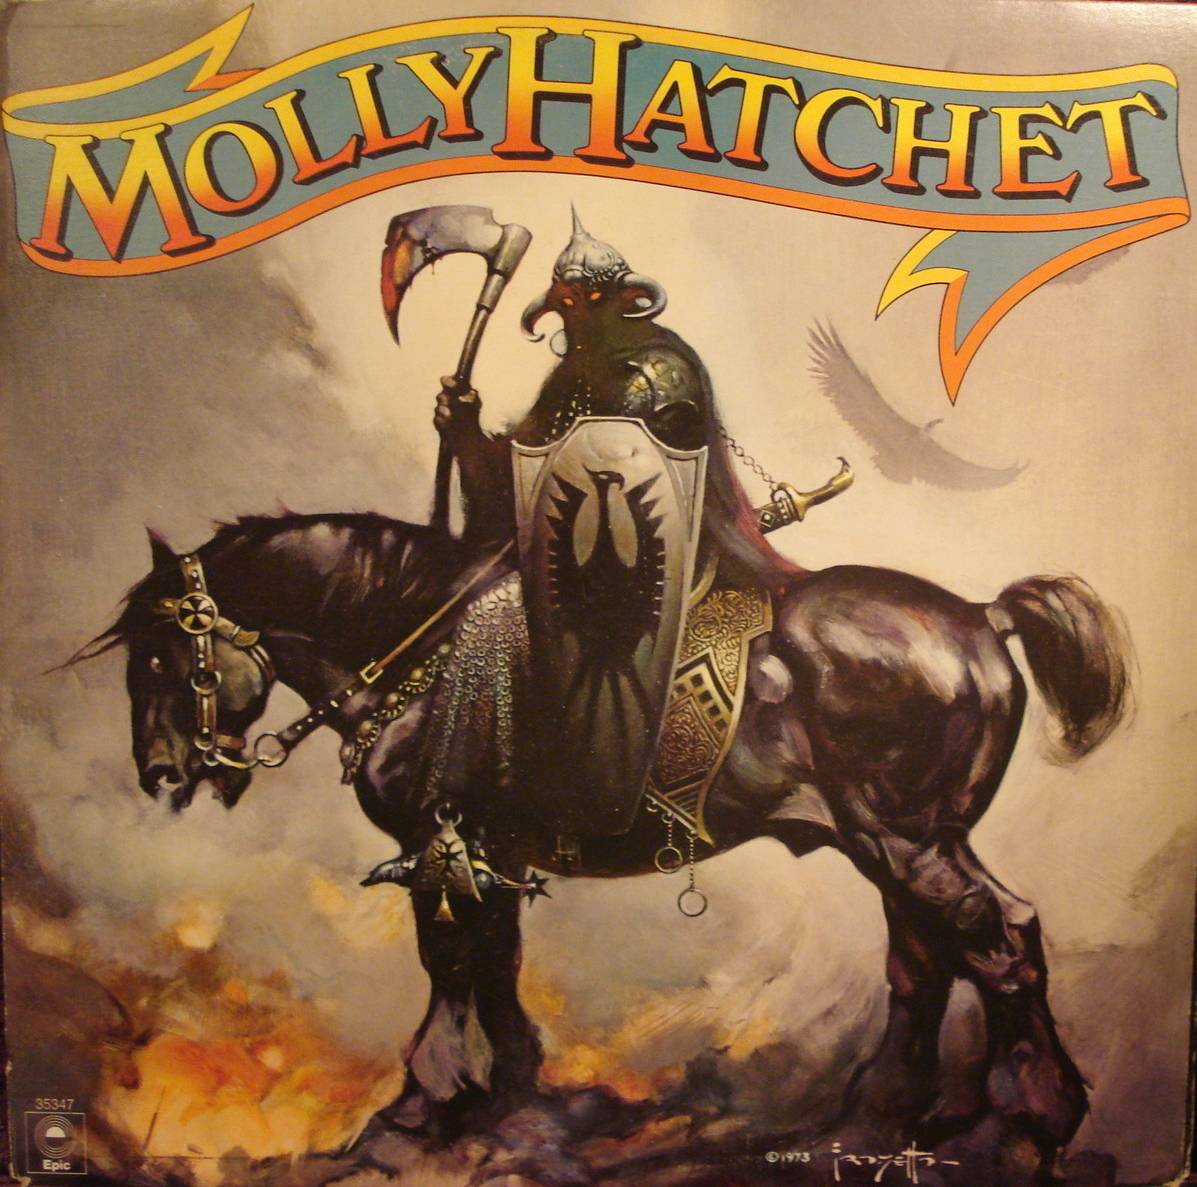 molly-hatchet-molly-hatchet-album-one.jpg